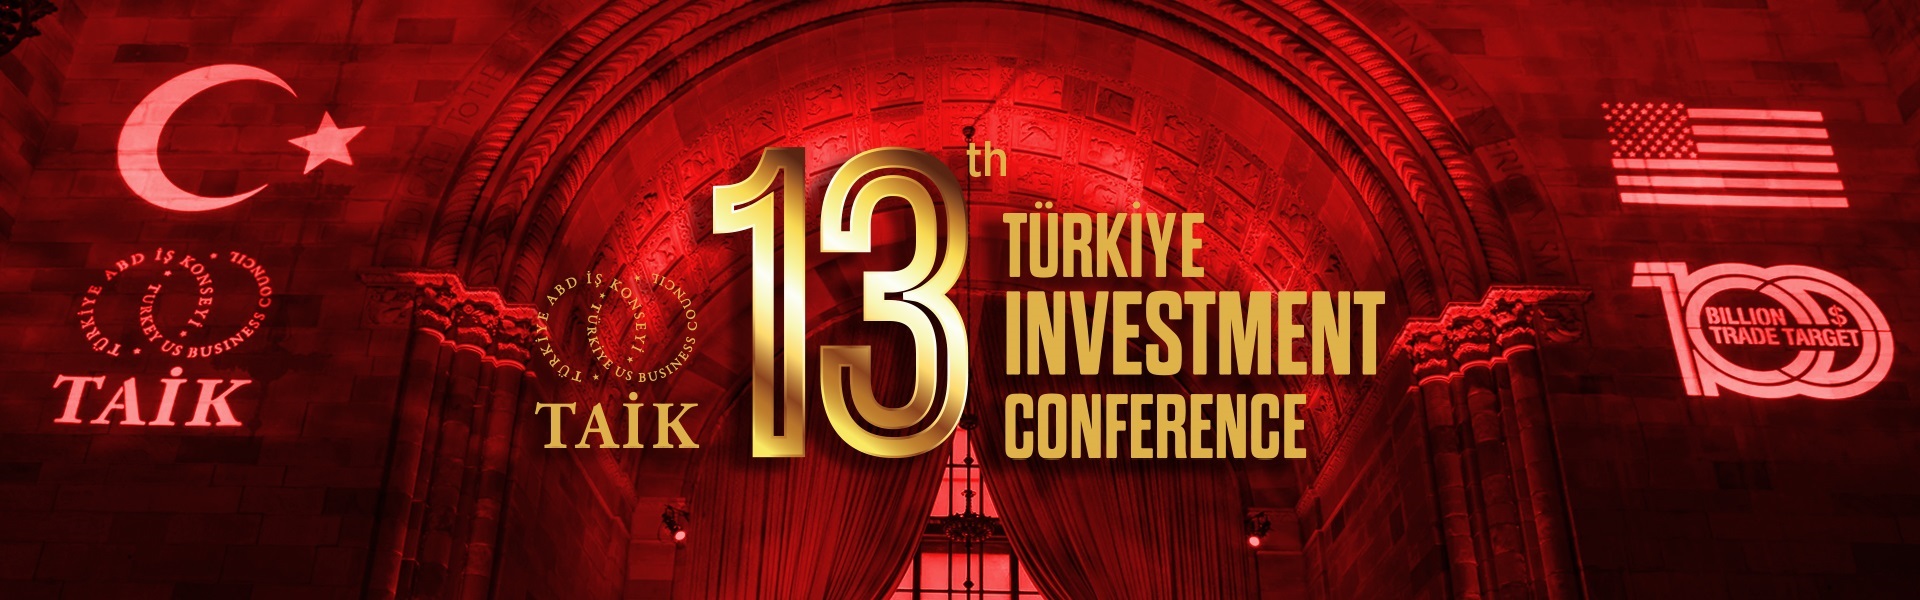 13th Türkiye Investment Conference